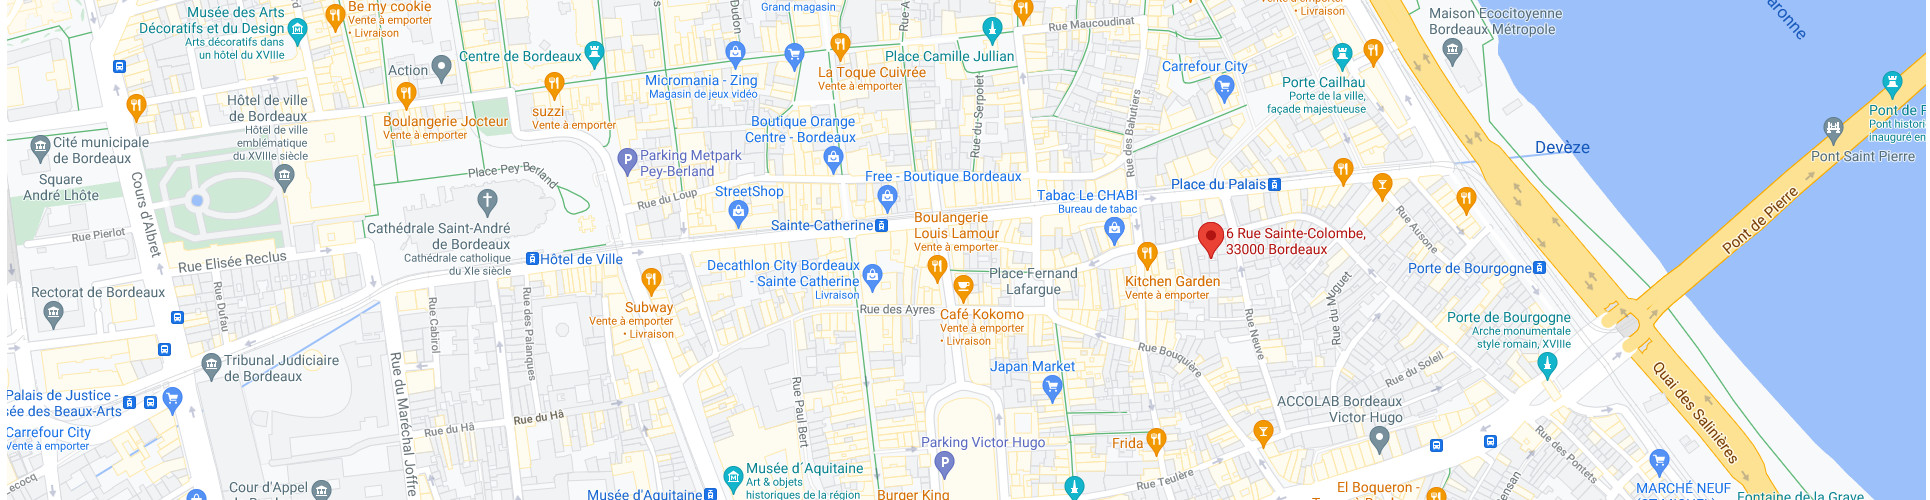 Cartographie Google Maps - Opteam Avocats - 6 rue Sainte Colombe, 33000 Bordeaux